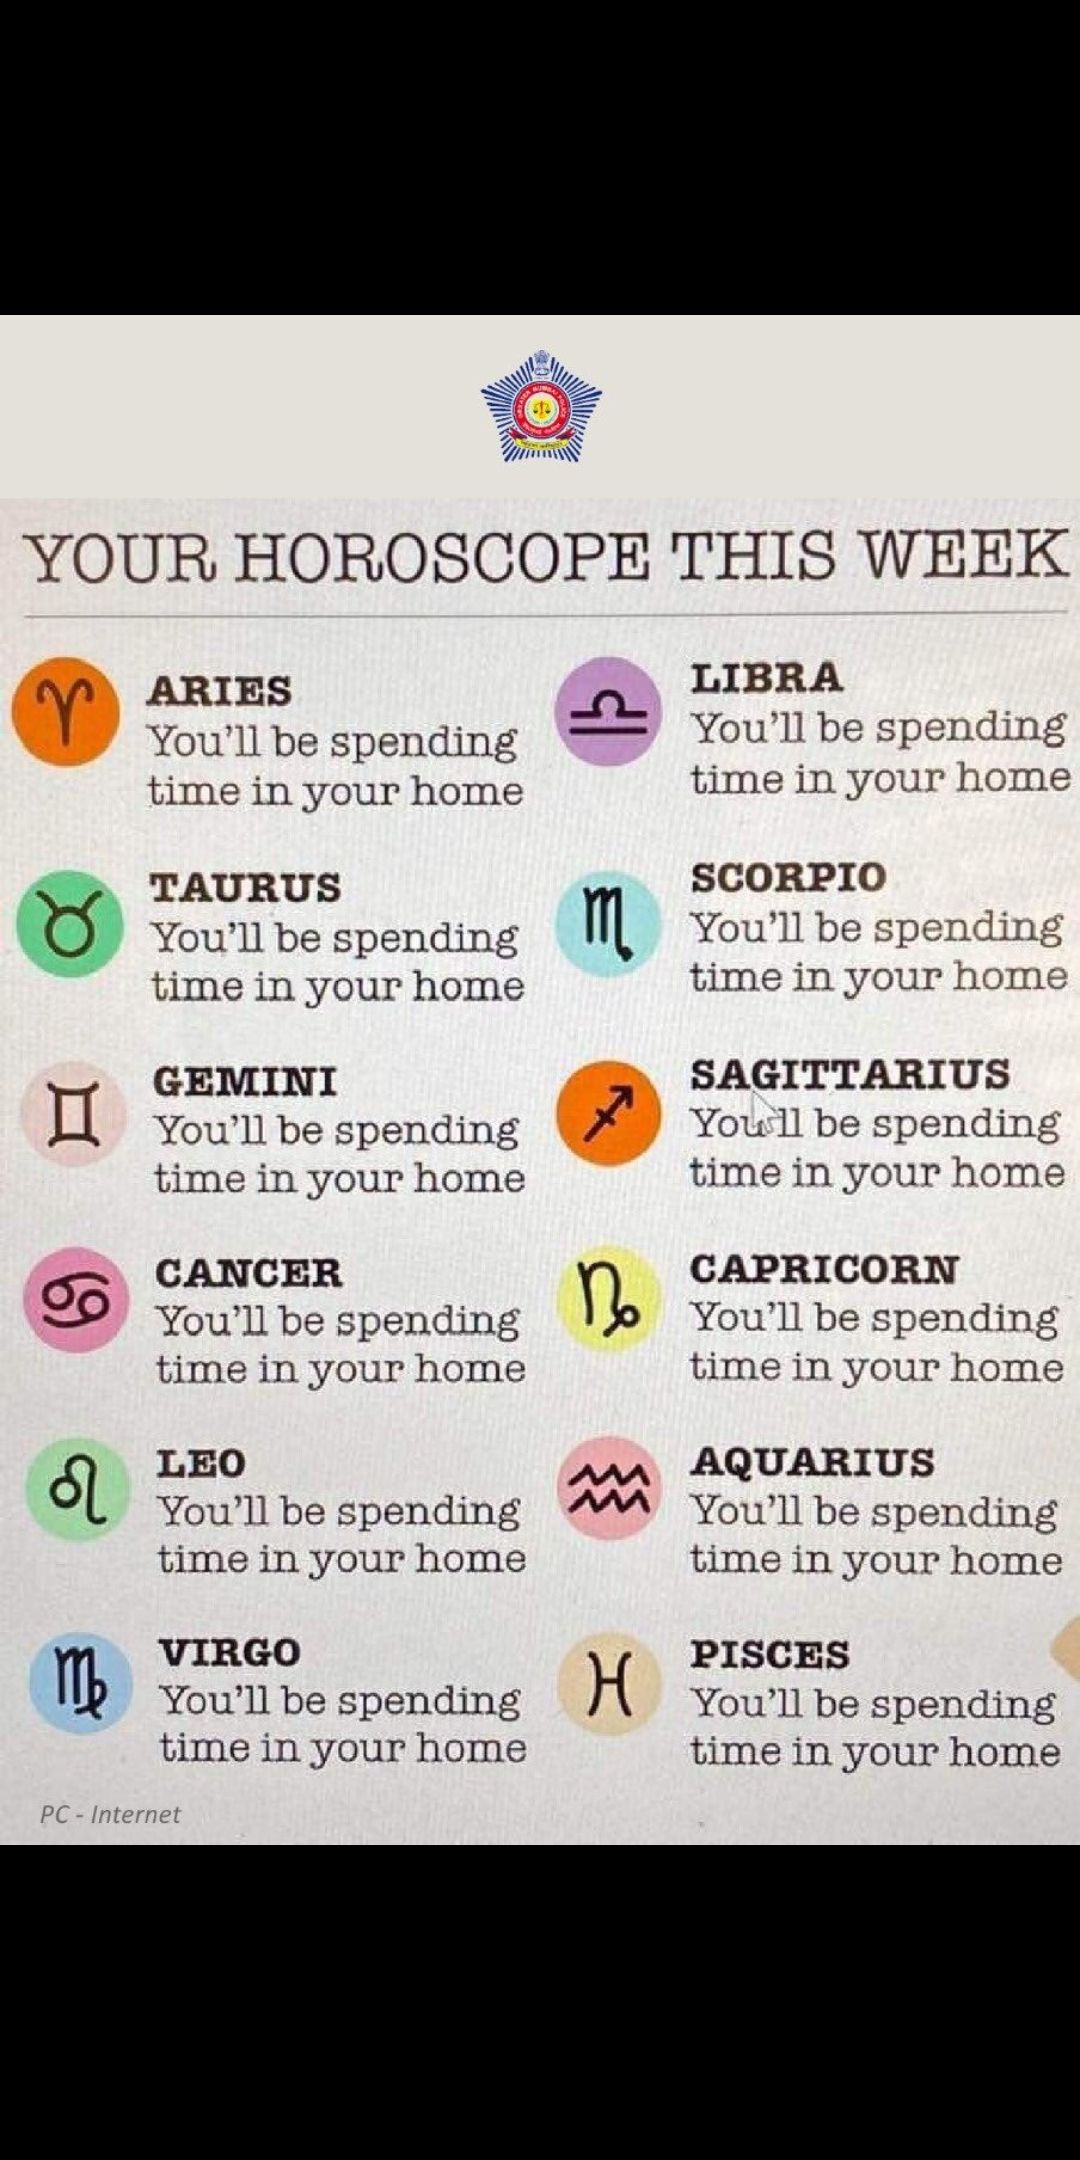 Today's horoscope